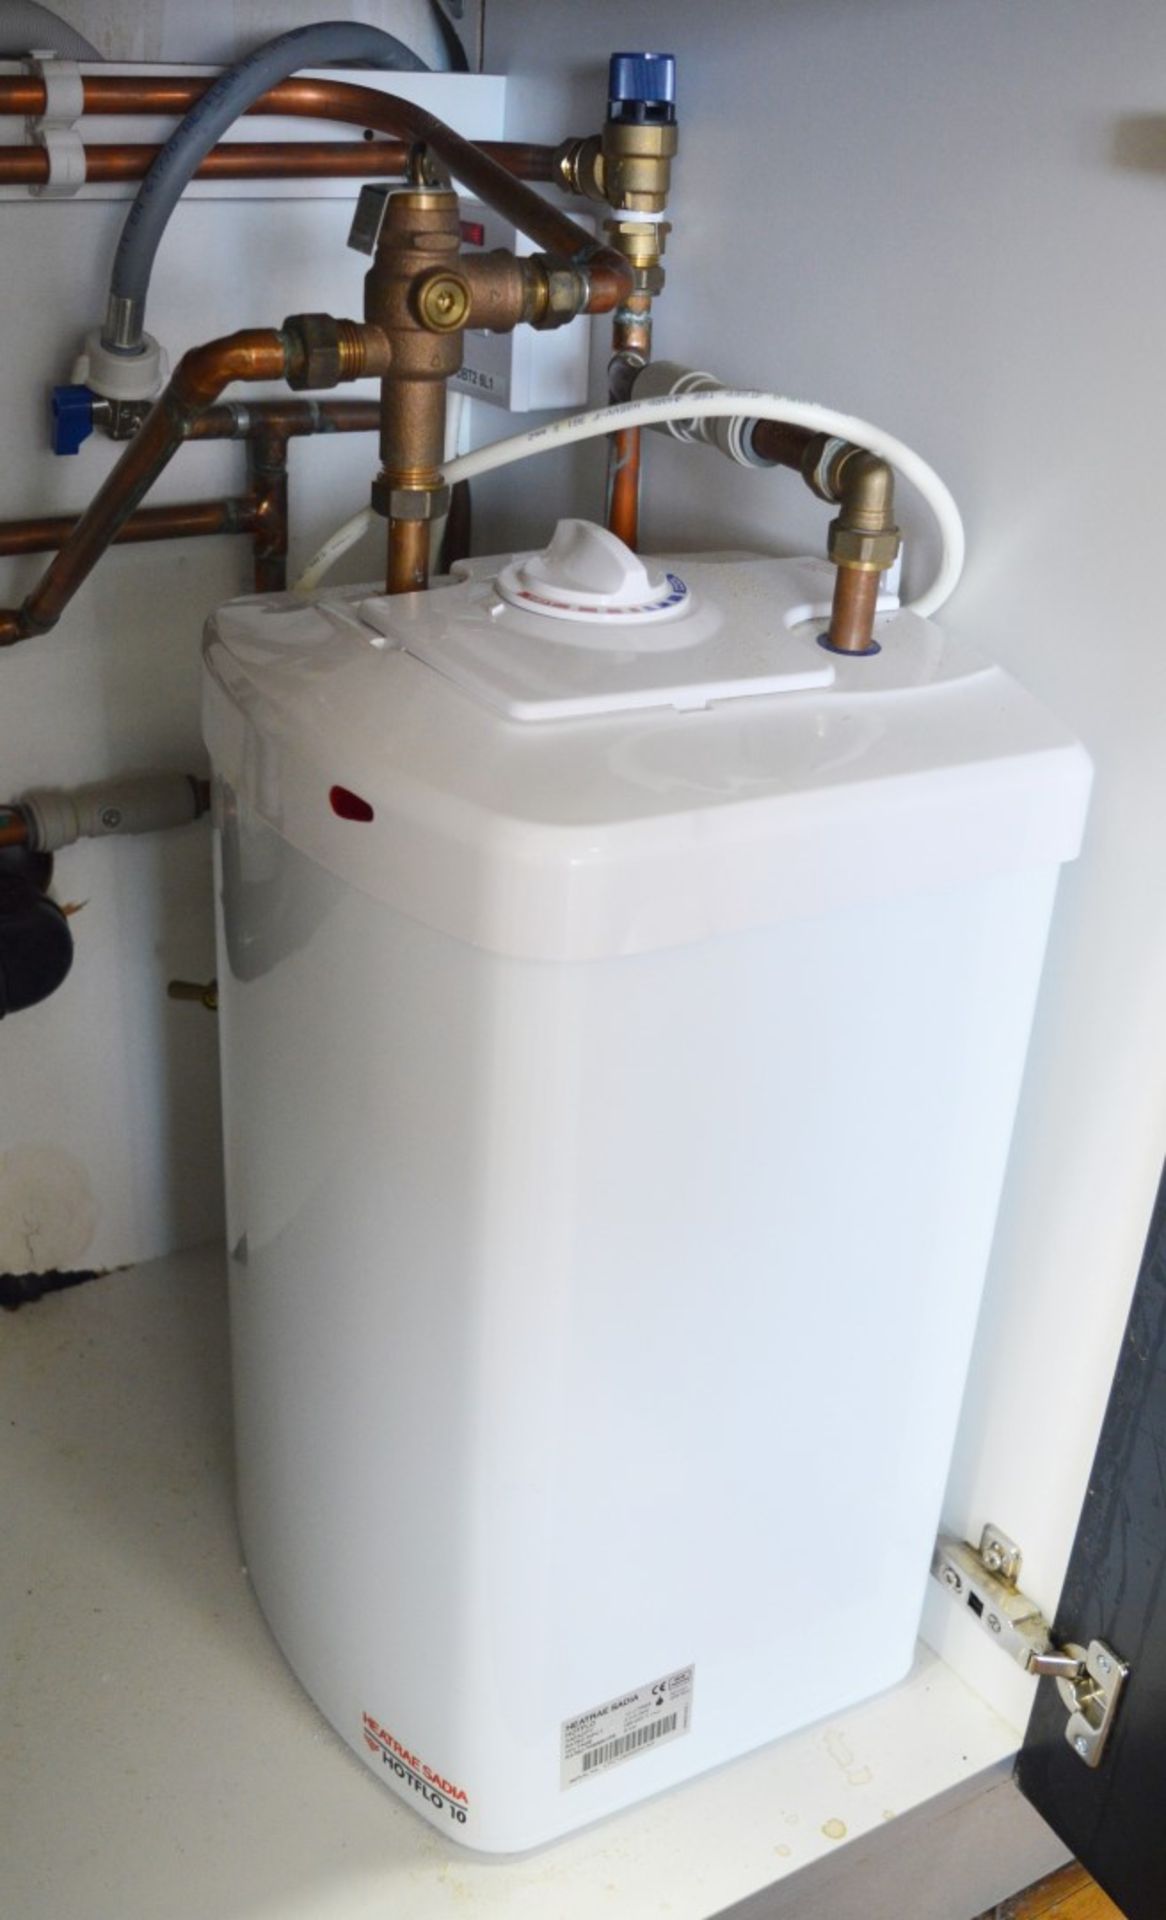 1 x Heatrea Sadia Hotflo 10 Litre 2.2kW Water Heater - SB016 - CL106 - Location: Manchester M1 - RRP